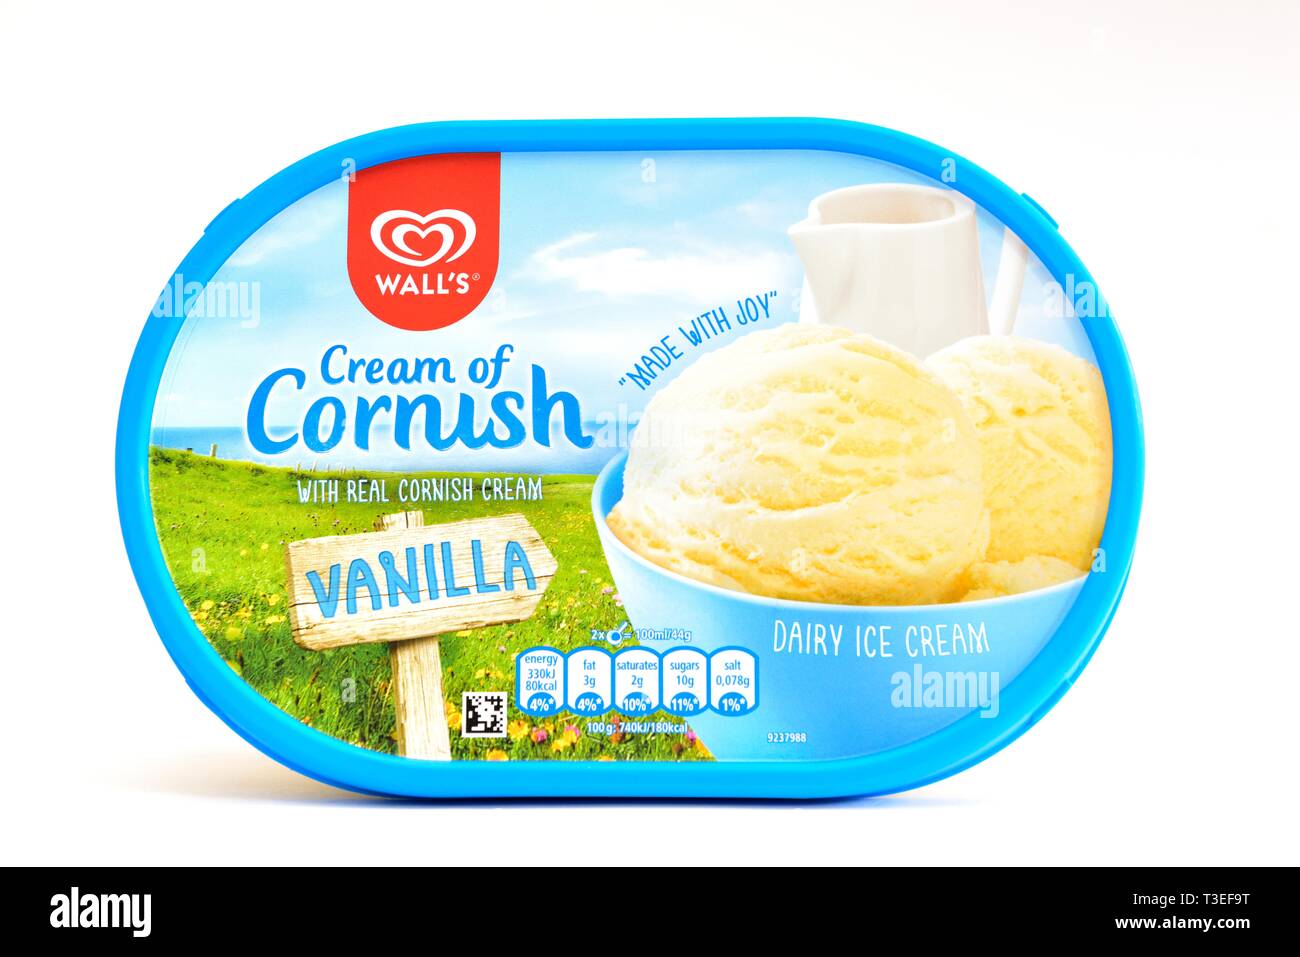 https://c8.alamy.com/comp/T3EF9T/walls-cream-of-cornishvanilla-dairy-ice-cream-tub-T3EF9T.jpg